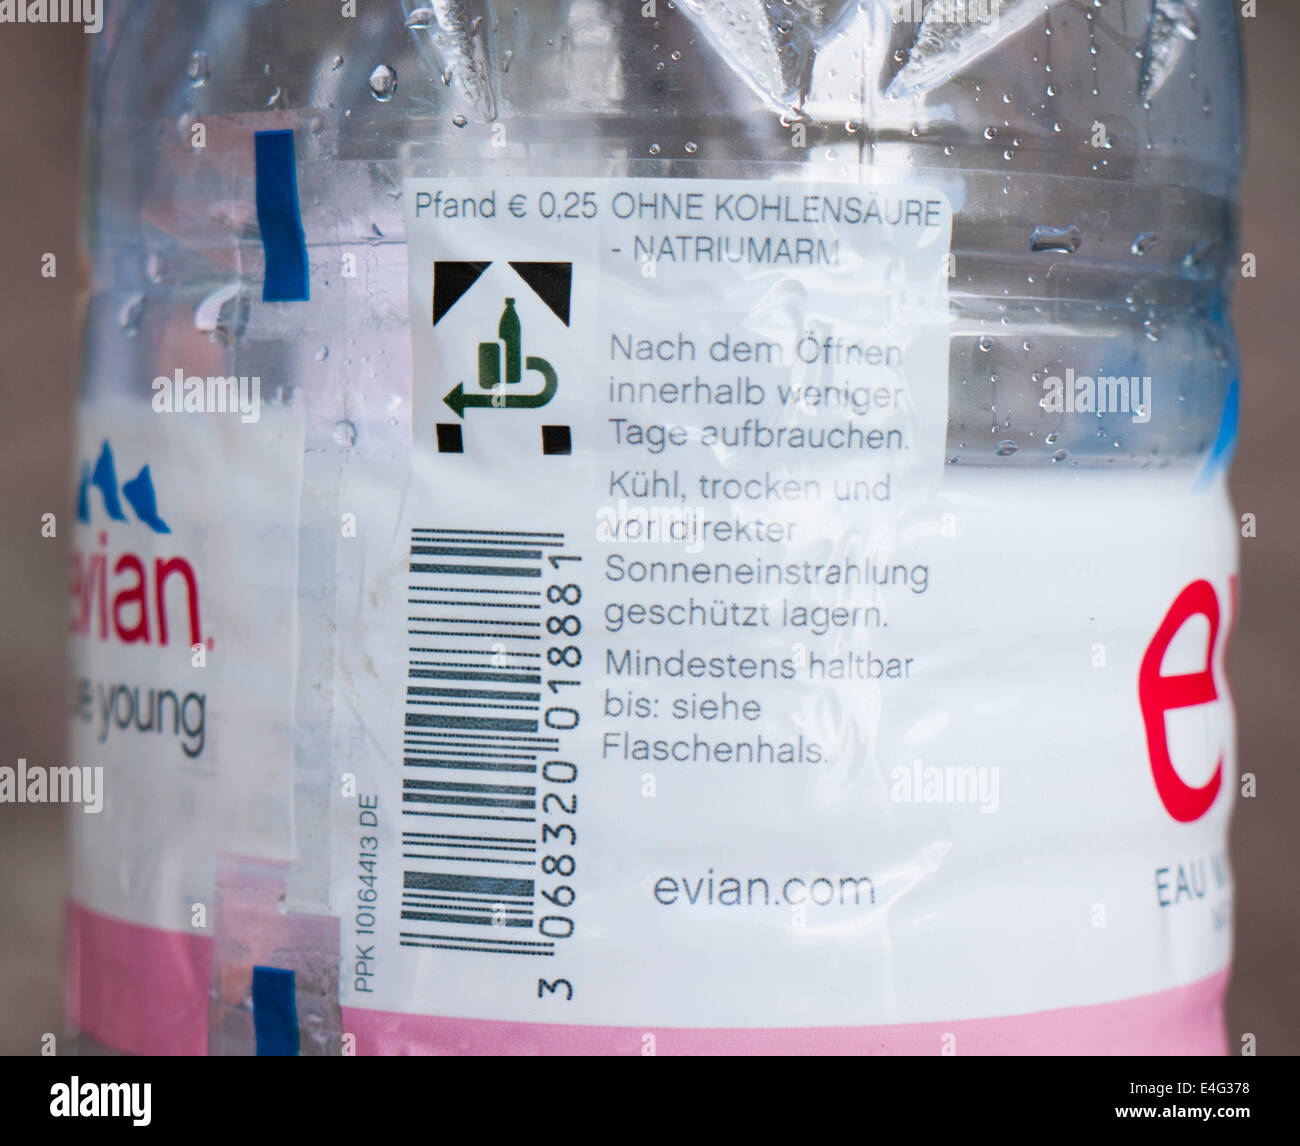 Pfand or deposit on return of a plastic water bottle in Germany